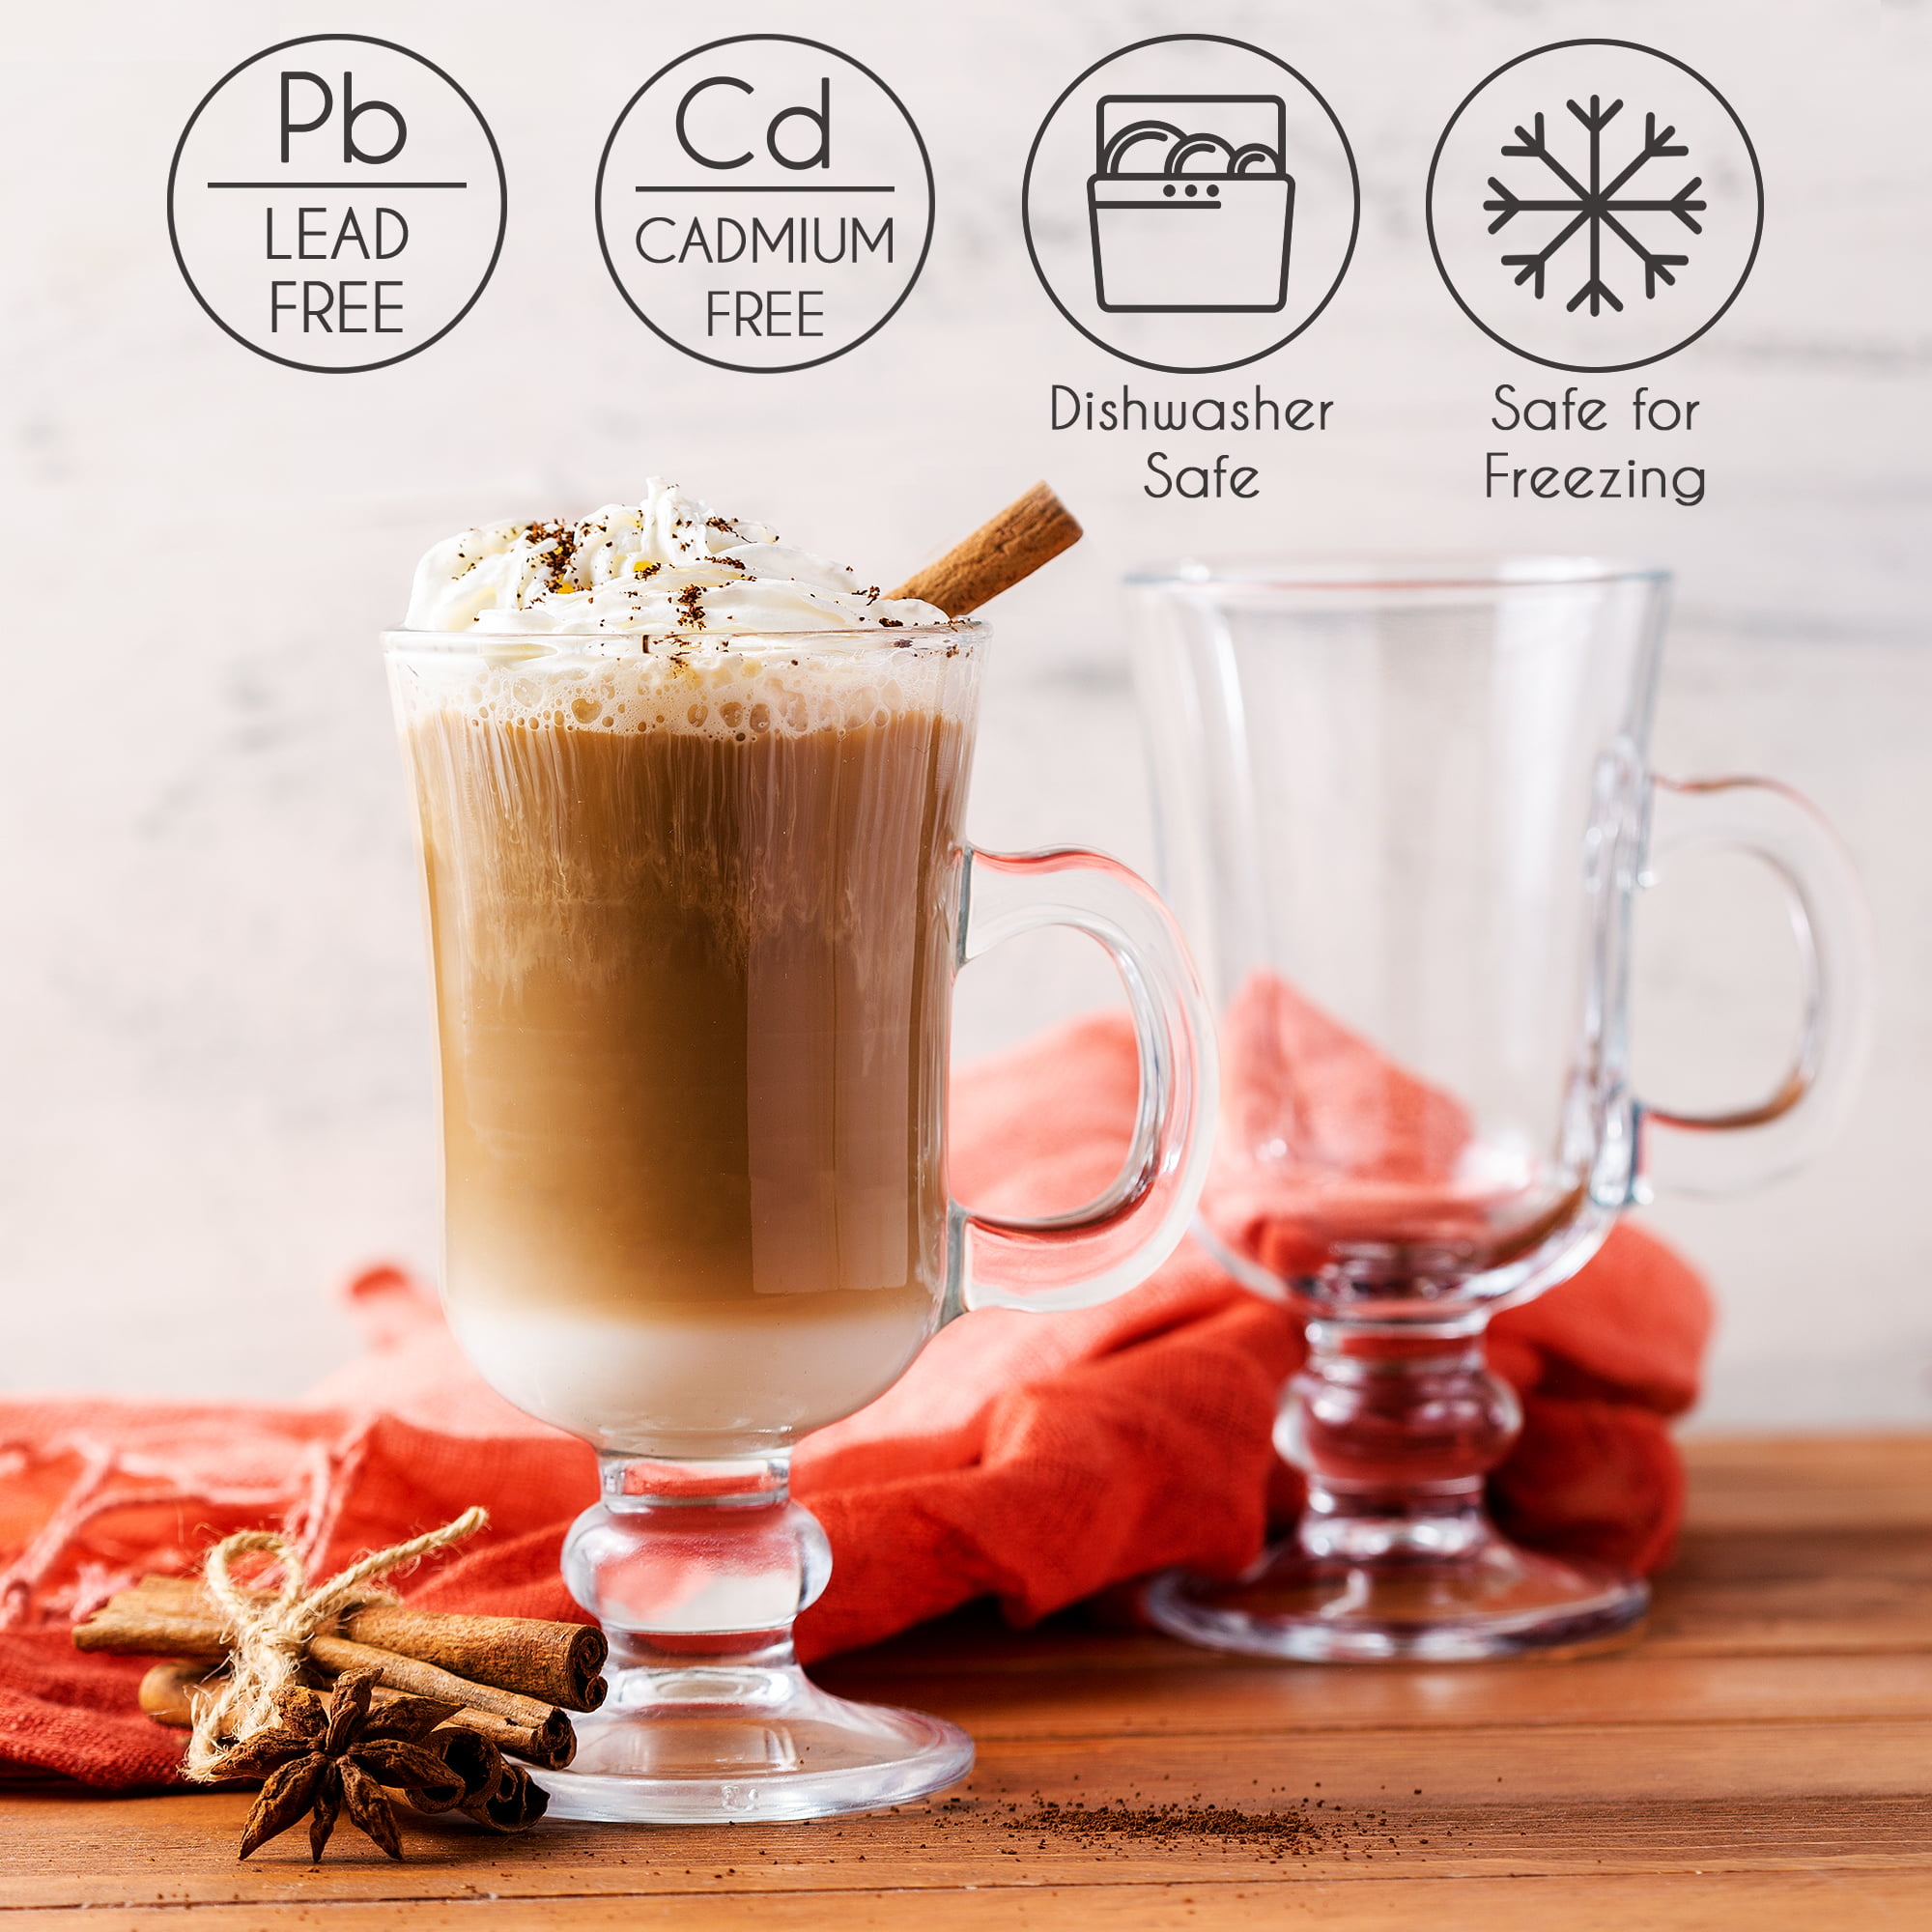 Set Of 4 Coffee Mugs Tea Clear Glass Cup Hot Drinks Cappuccino Chocolate  300ml